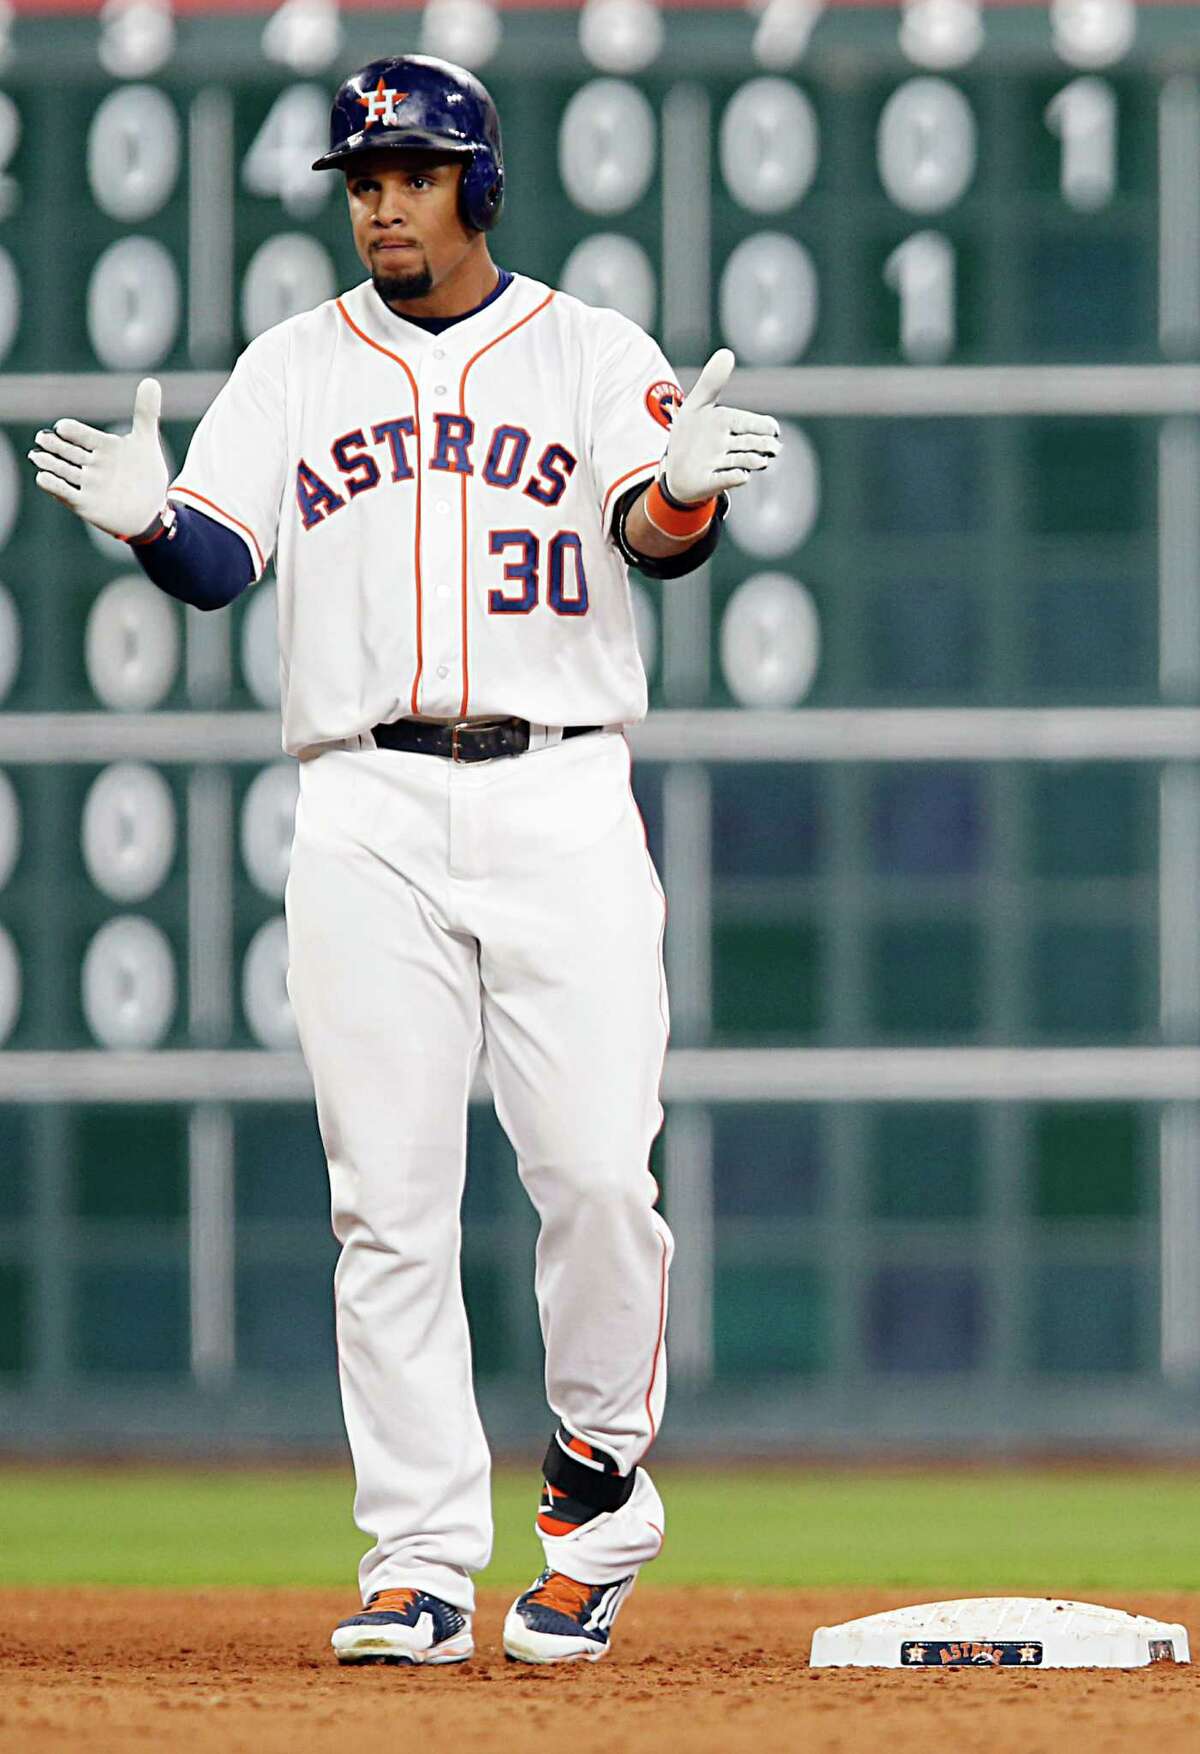 ASTROS, MORE MLB: MAY 7, 2008